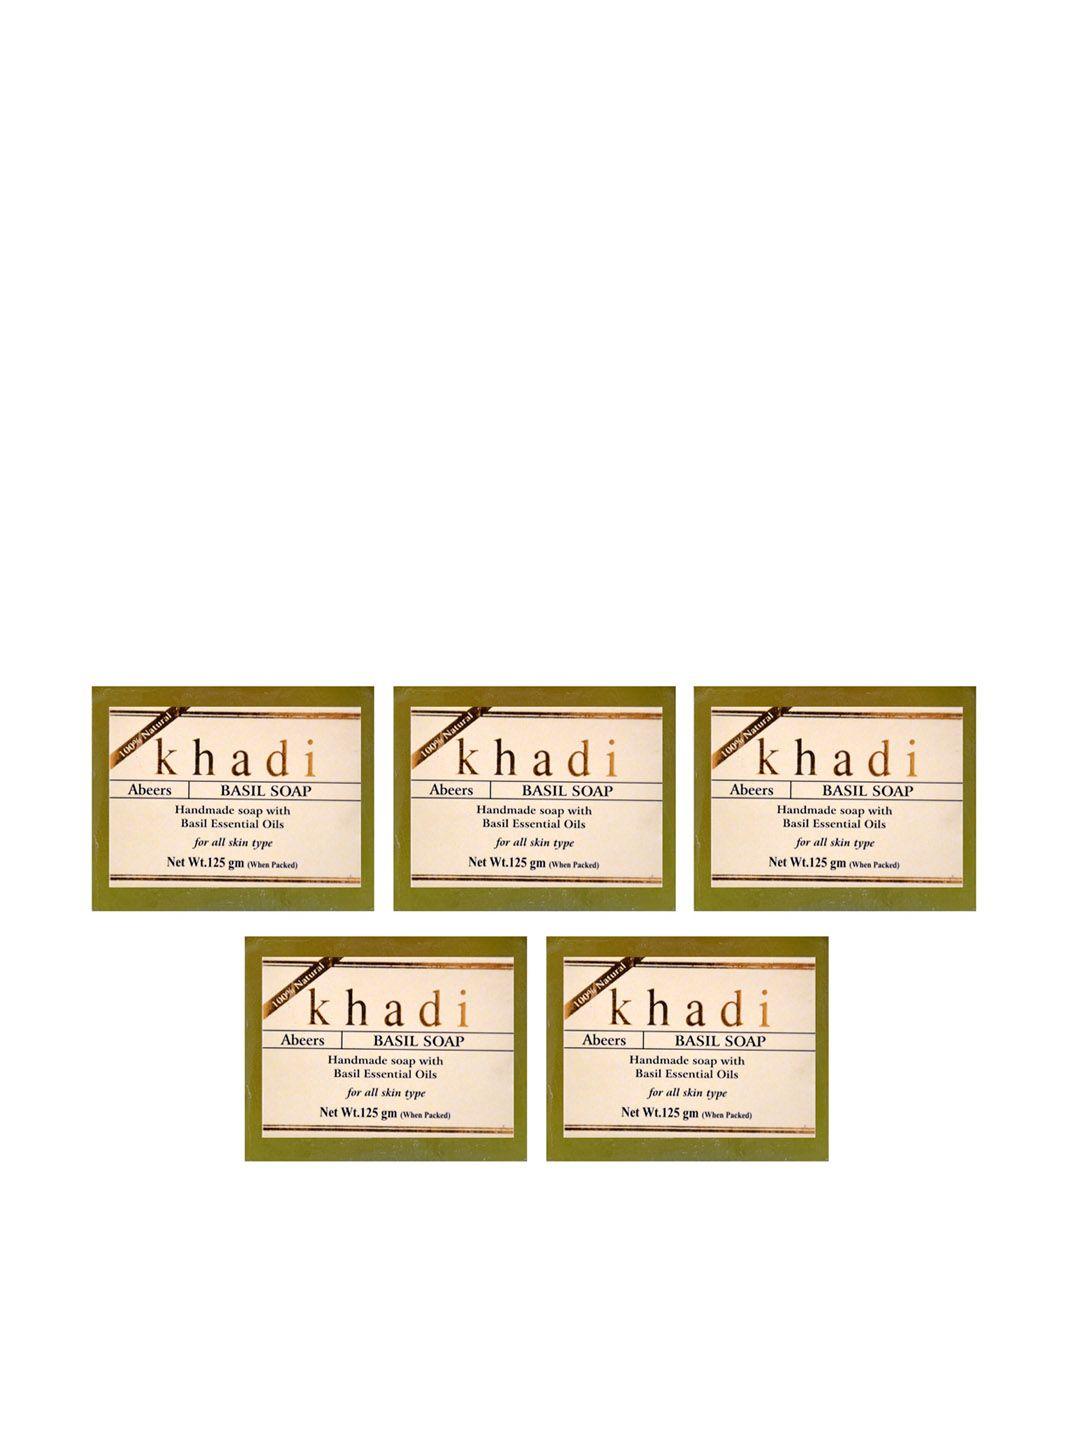 abeers khadi set of 5 handmade basil soaps with essential oils - 125 g each